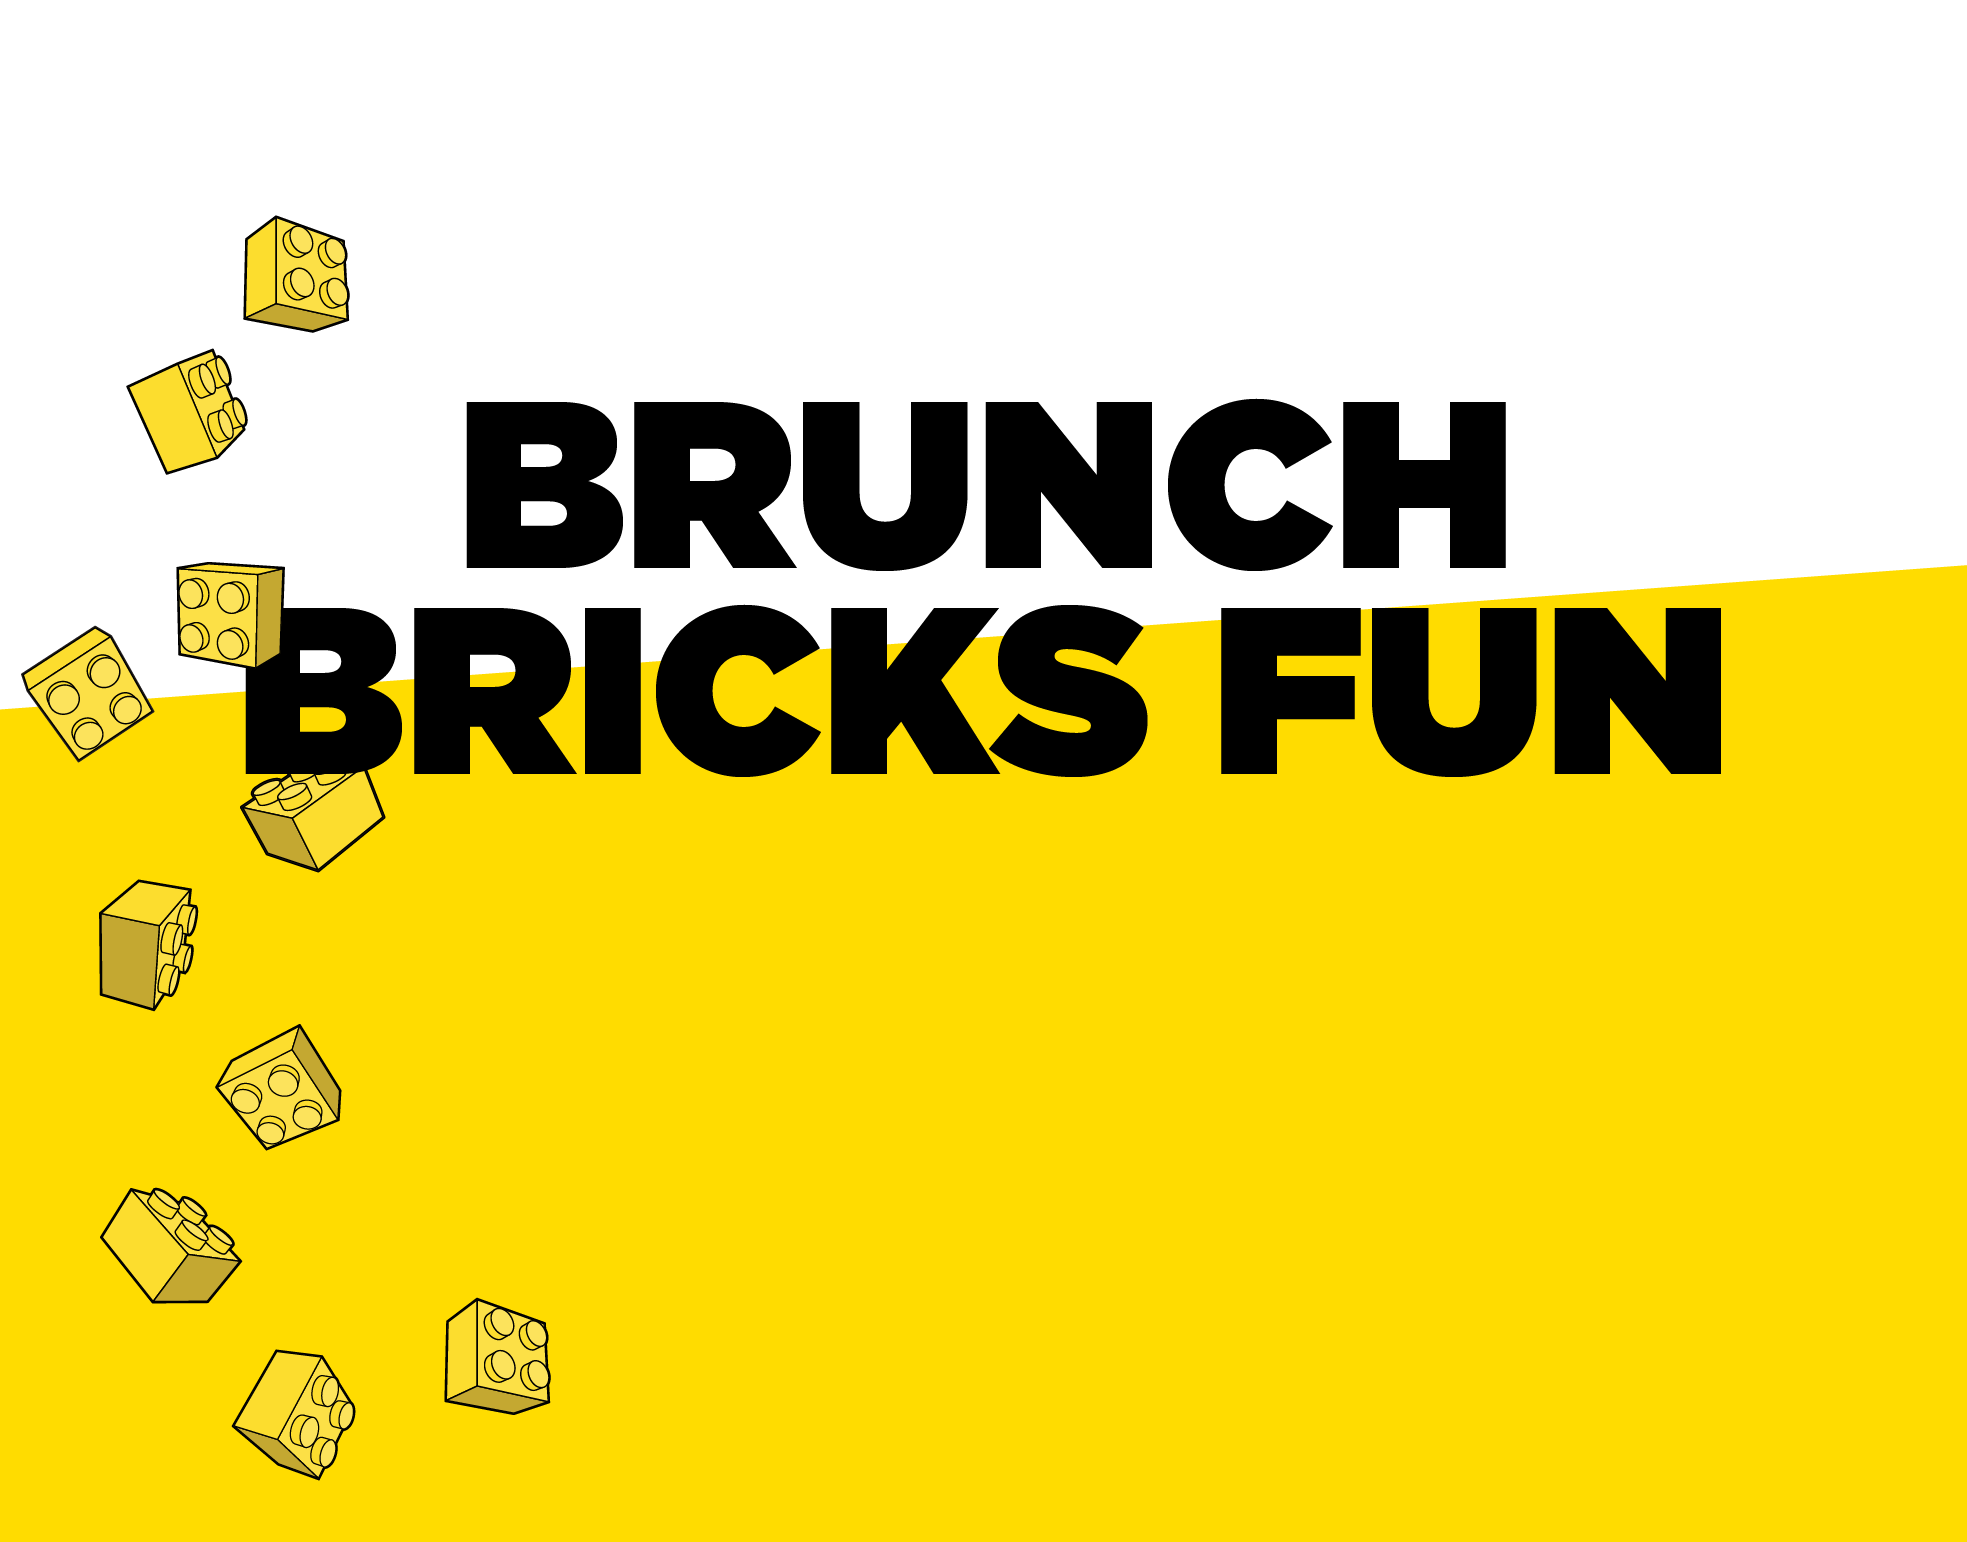 Brunch bricks fun